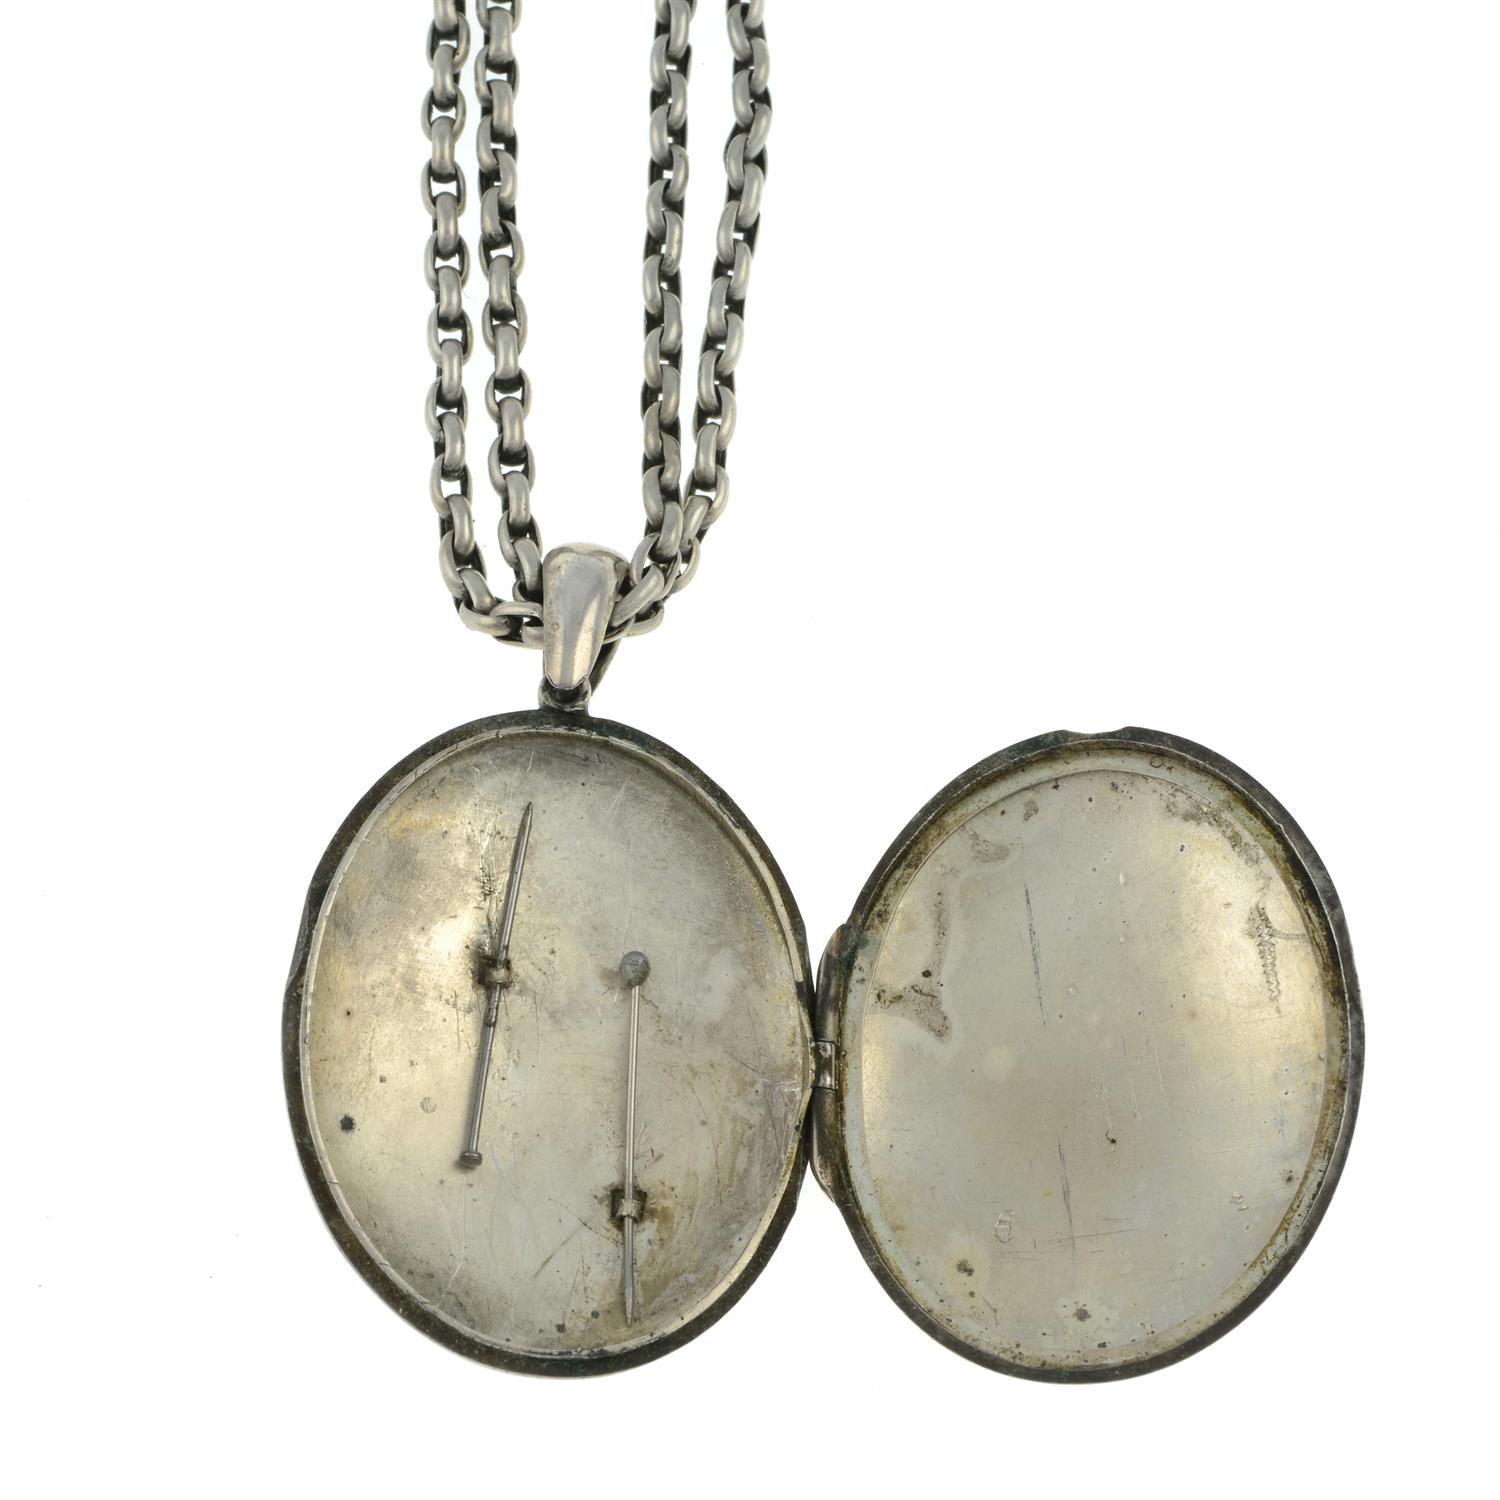 Victorian locket pendant & longuard chain - Image 2 of 3